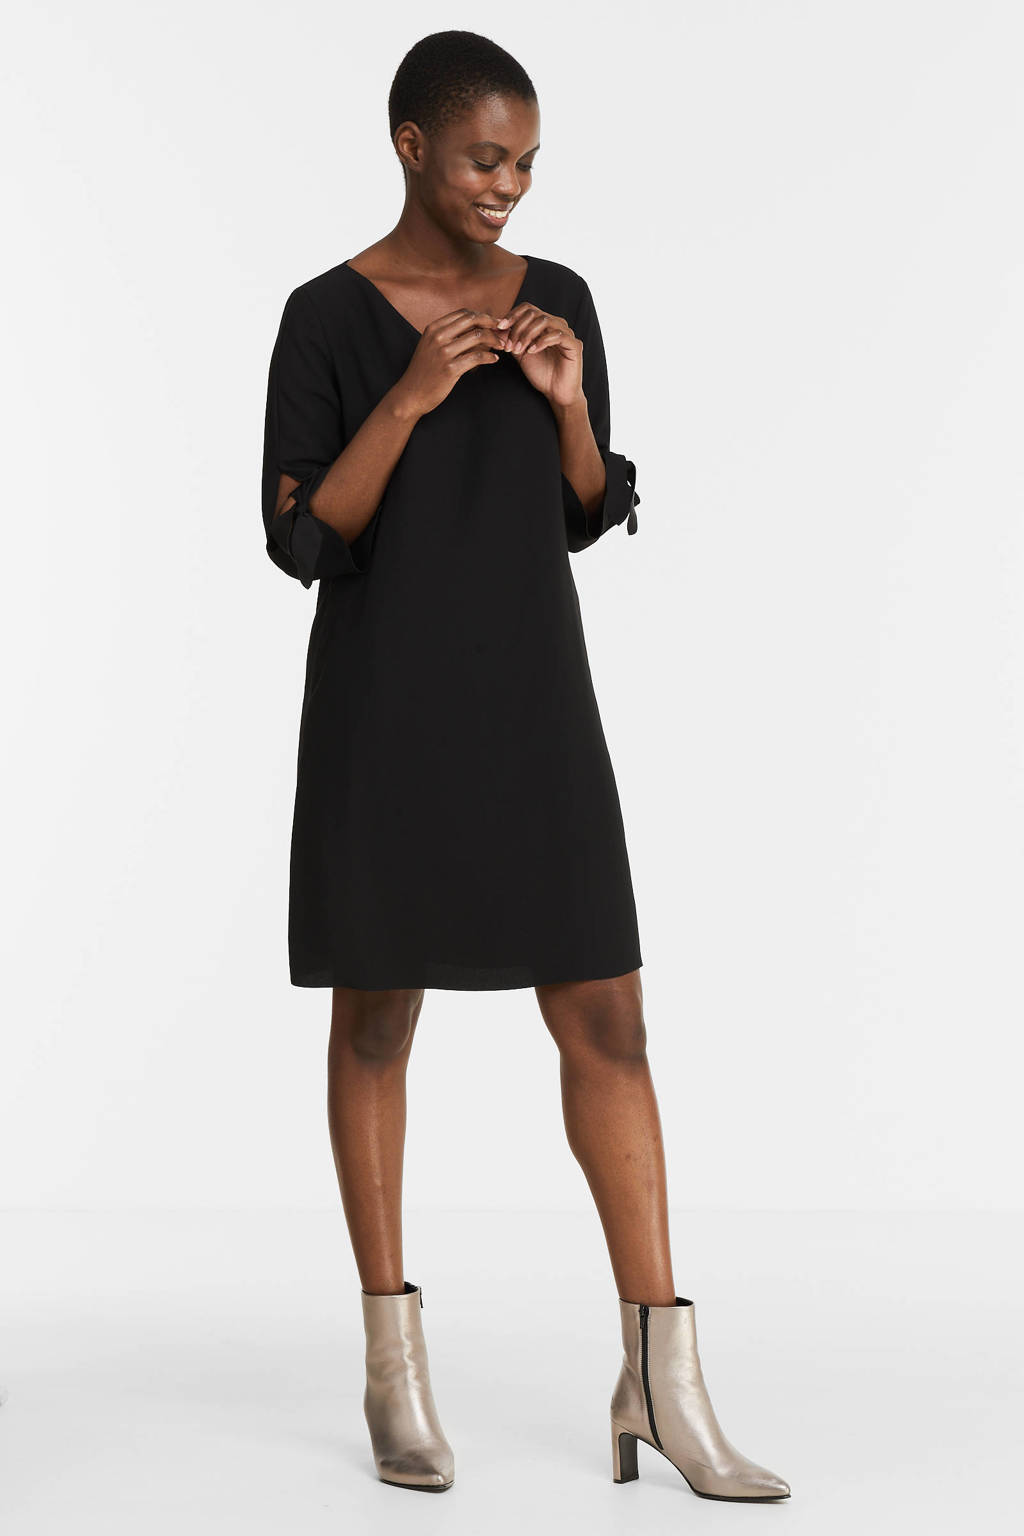 Zwarte dames edc Women jurk van polyester met driekwart mouwen, V-hals, ritssluiting en knoopdetail